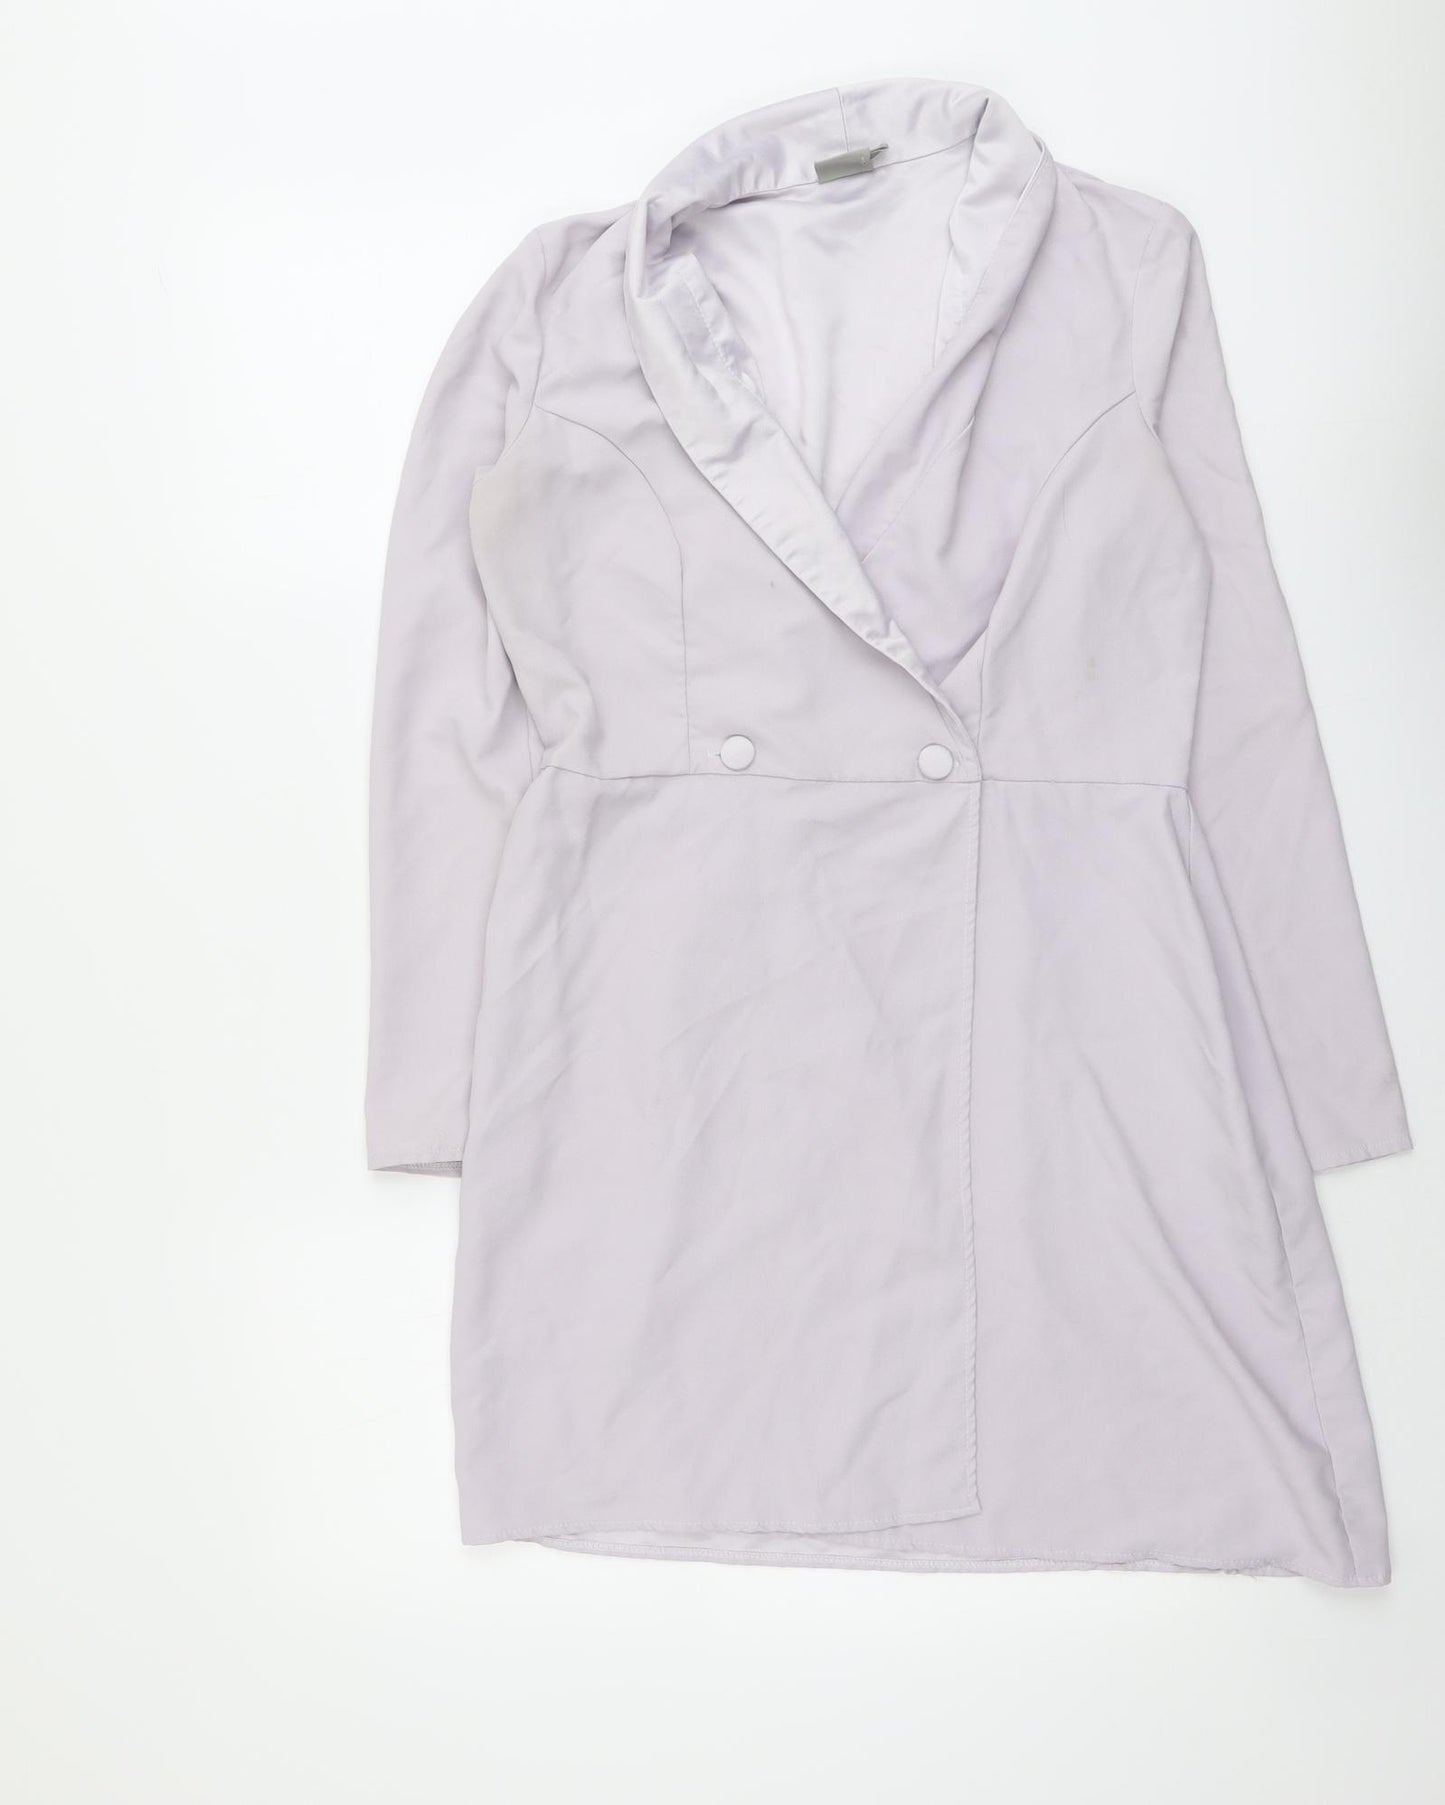 ASOS Womens Grey Polyester Jacket Dress Size 12 V-Neck Button